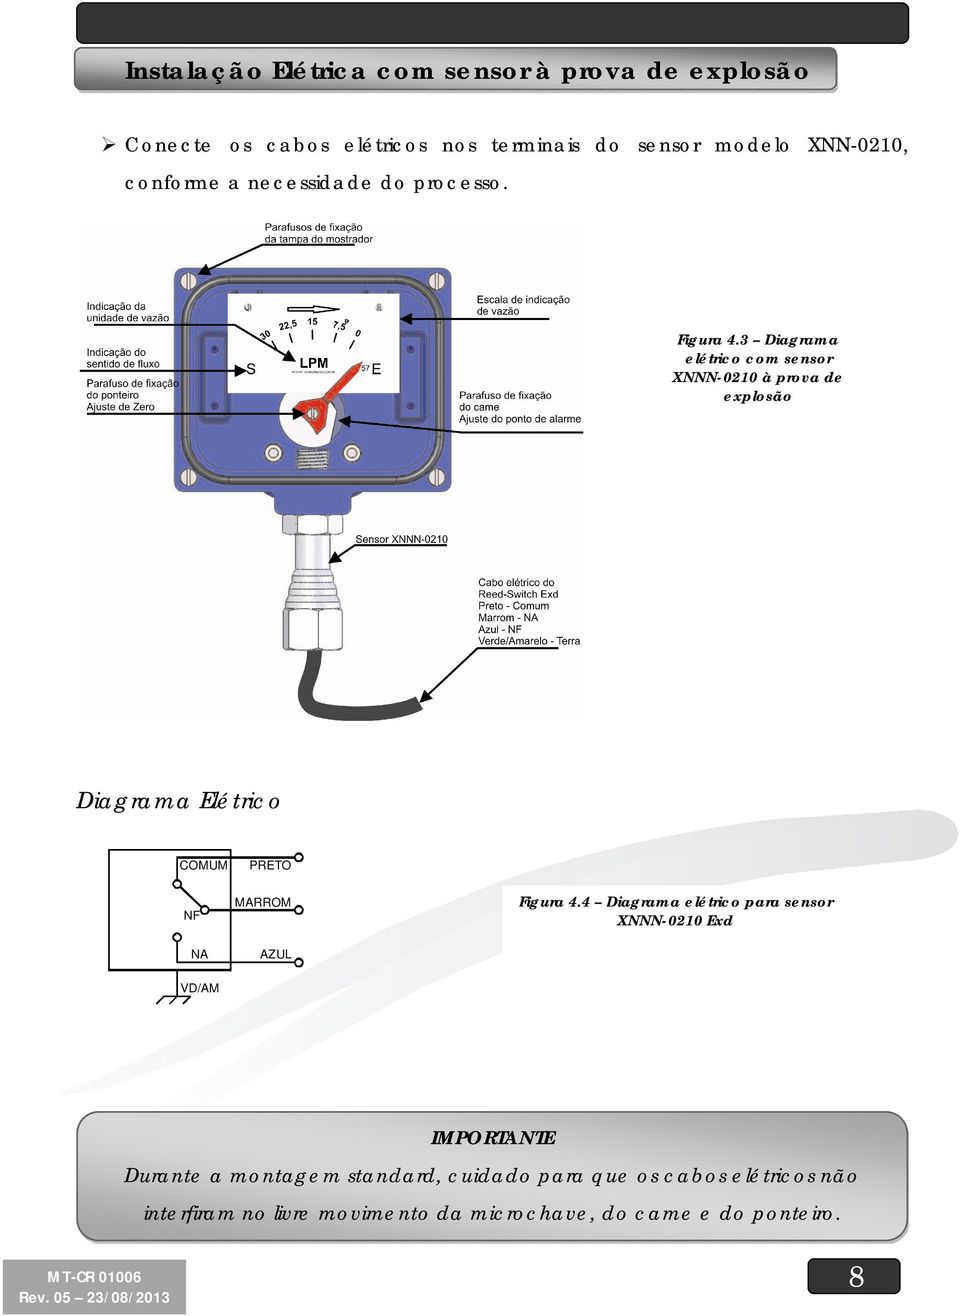 3 Diagrama elétrico com sensor XNNN-0210 à prova de explosão Diagrama Elétrico COMUM PRETO MARROM NF NA Figura 4.